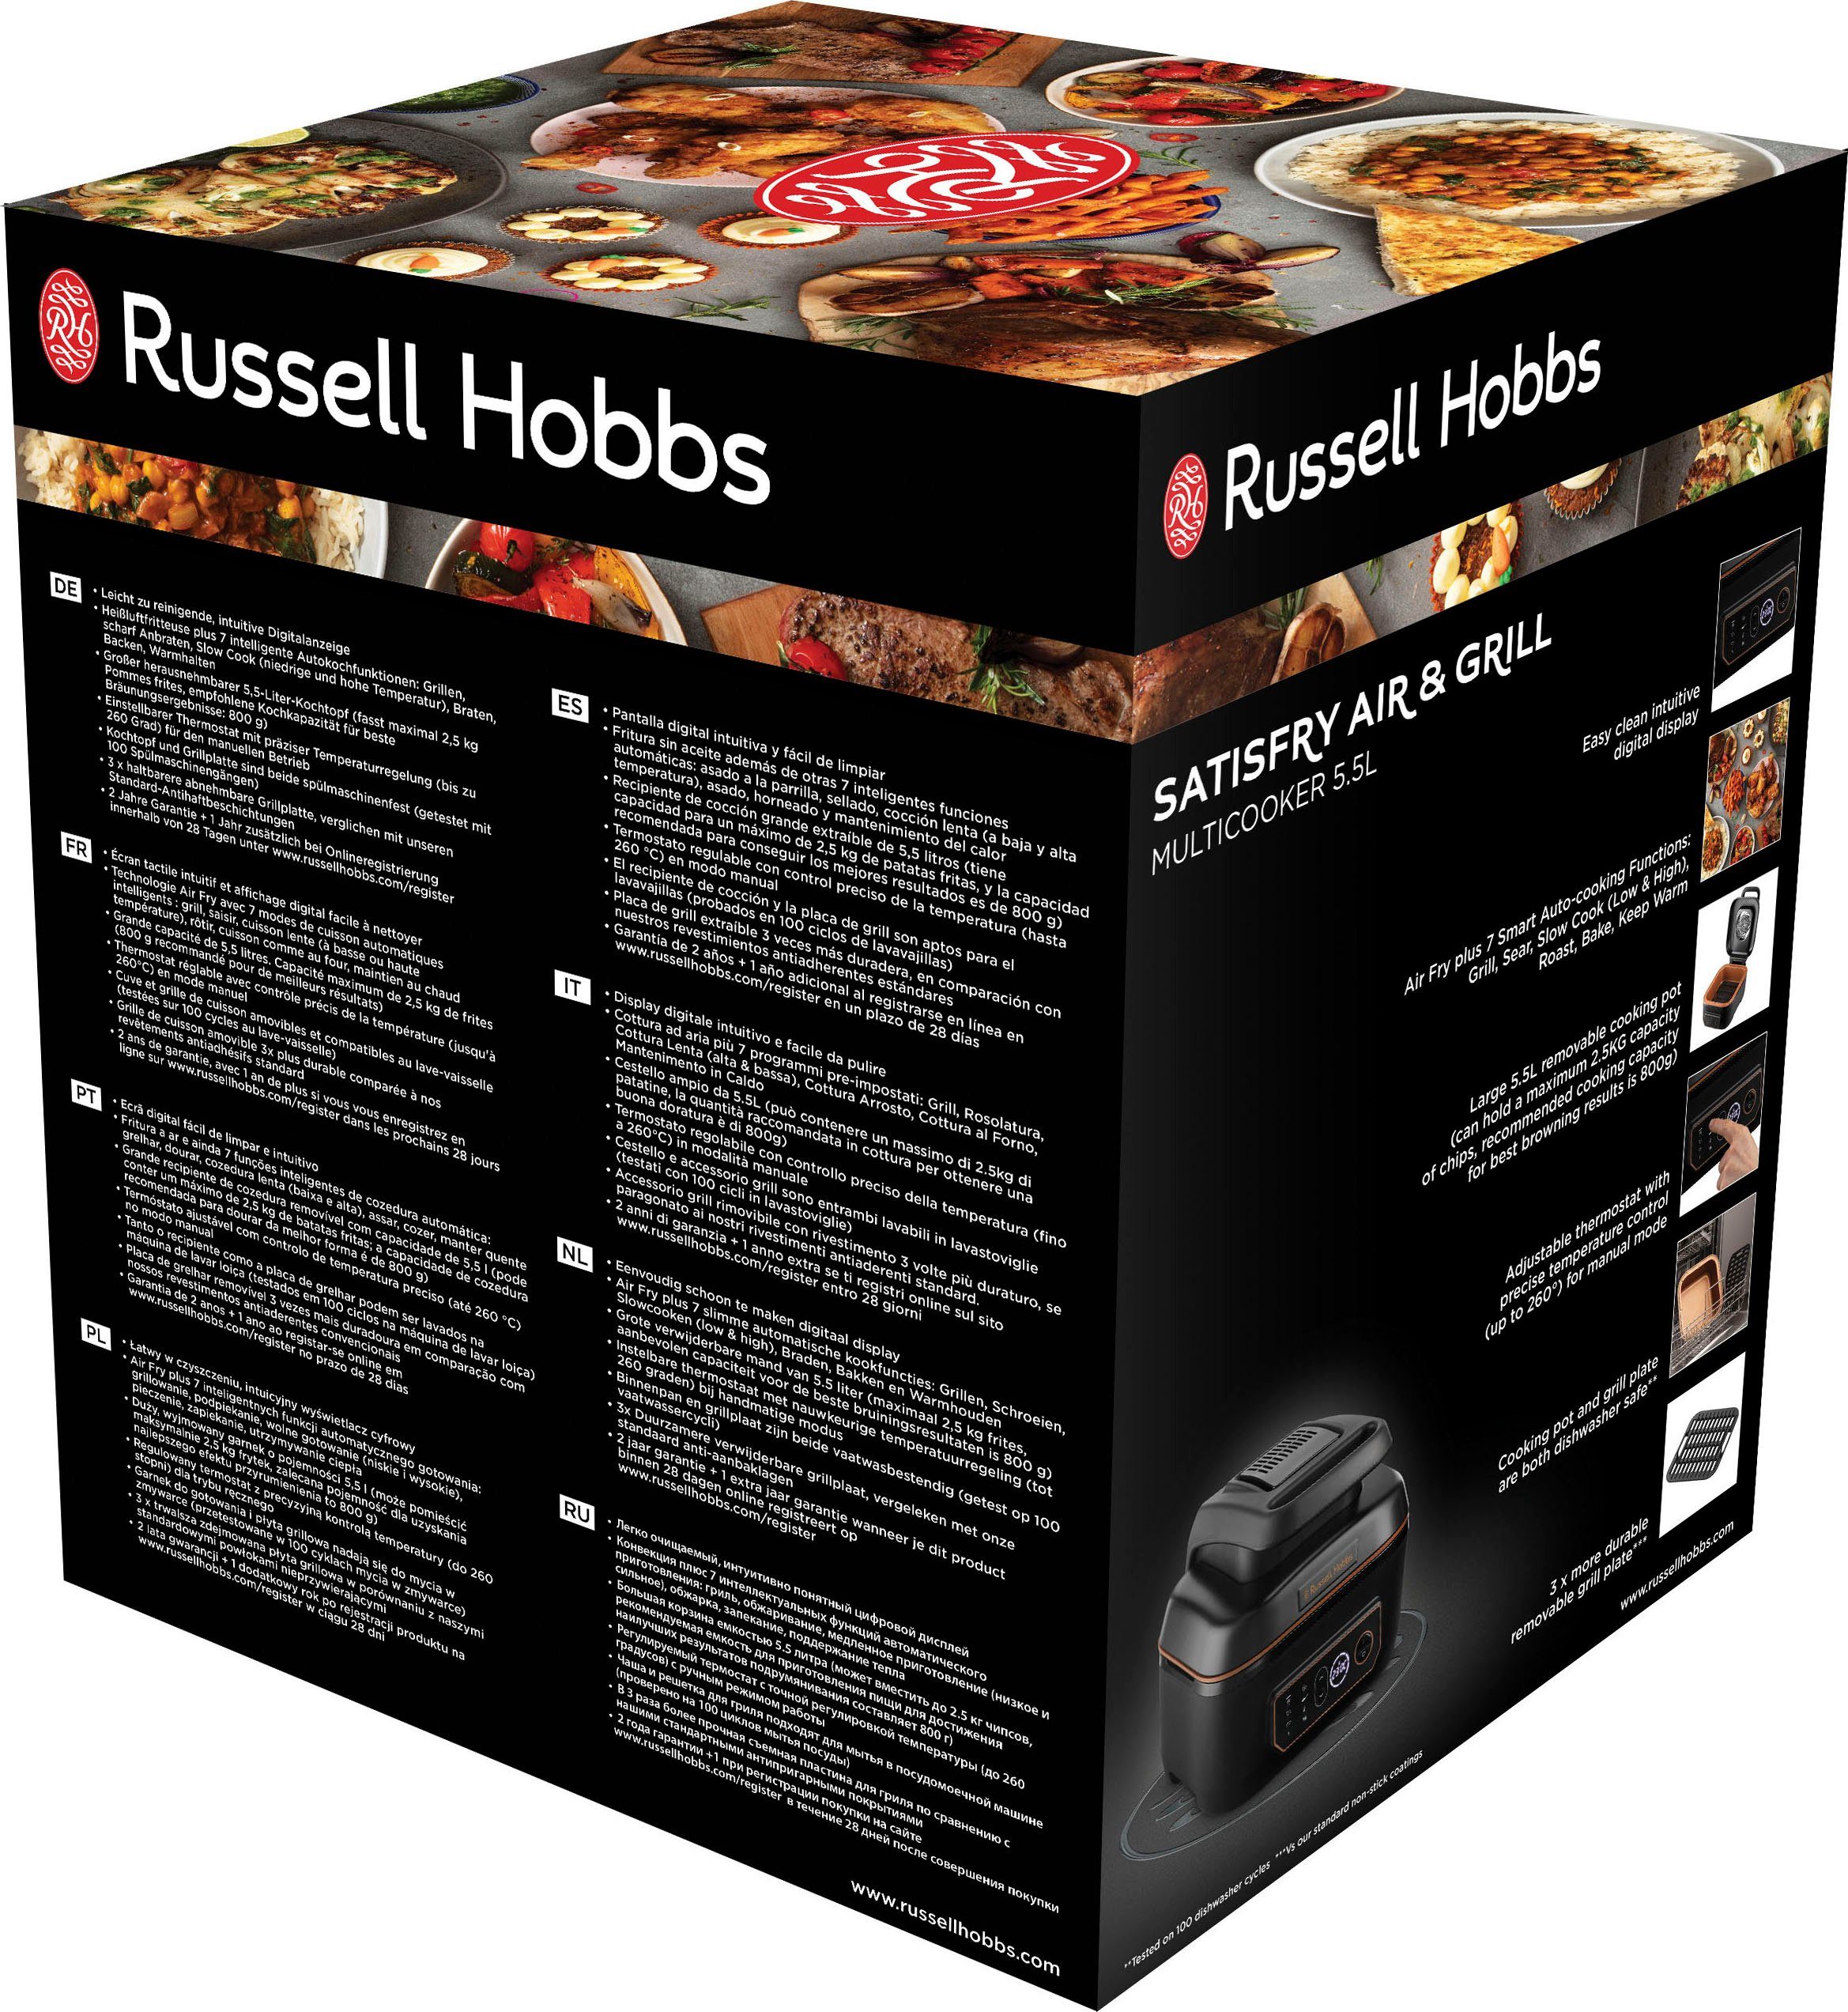 RUSSELL HOBBS Heißluftfritteuse Multikocher 26520-56, - 5,5 1745 Air SatisFry W, l Grill & groß